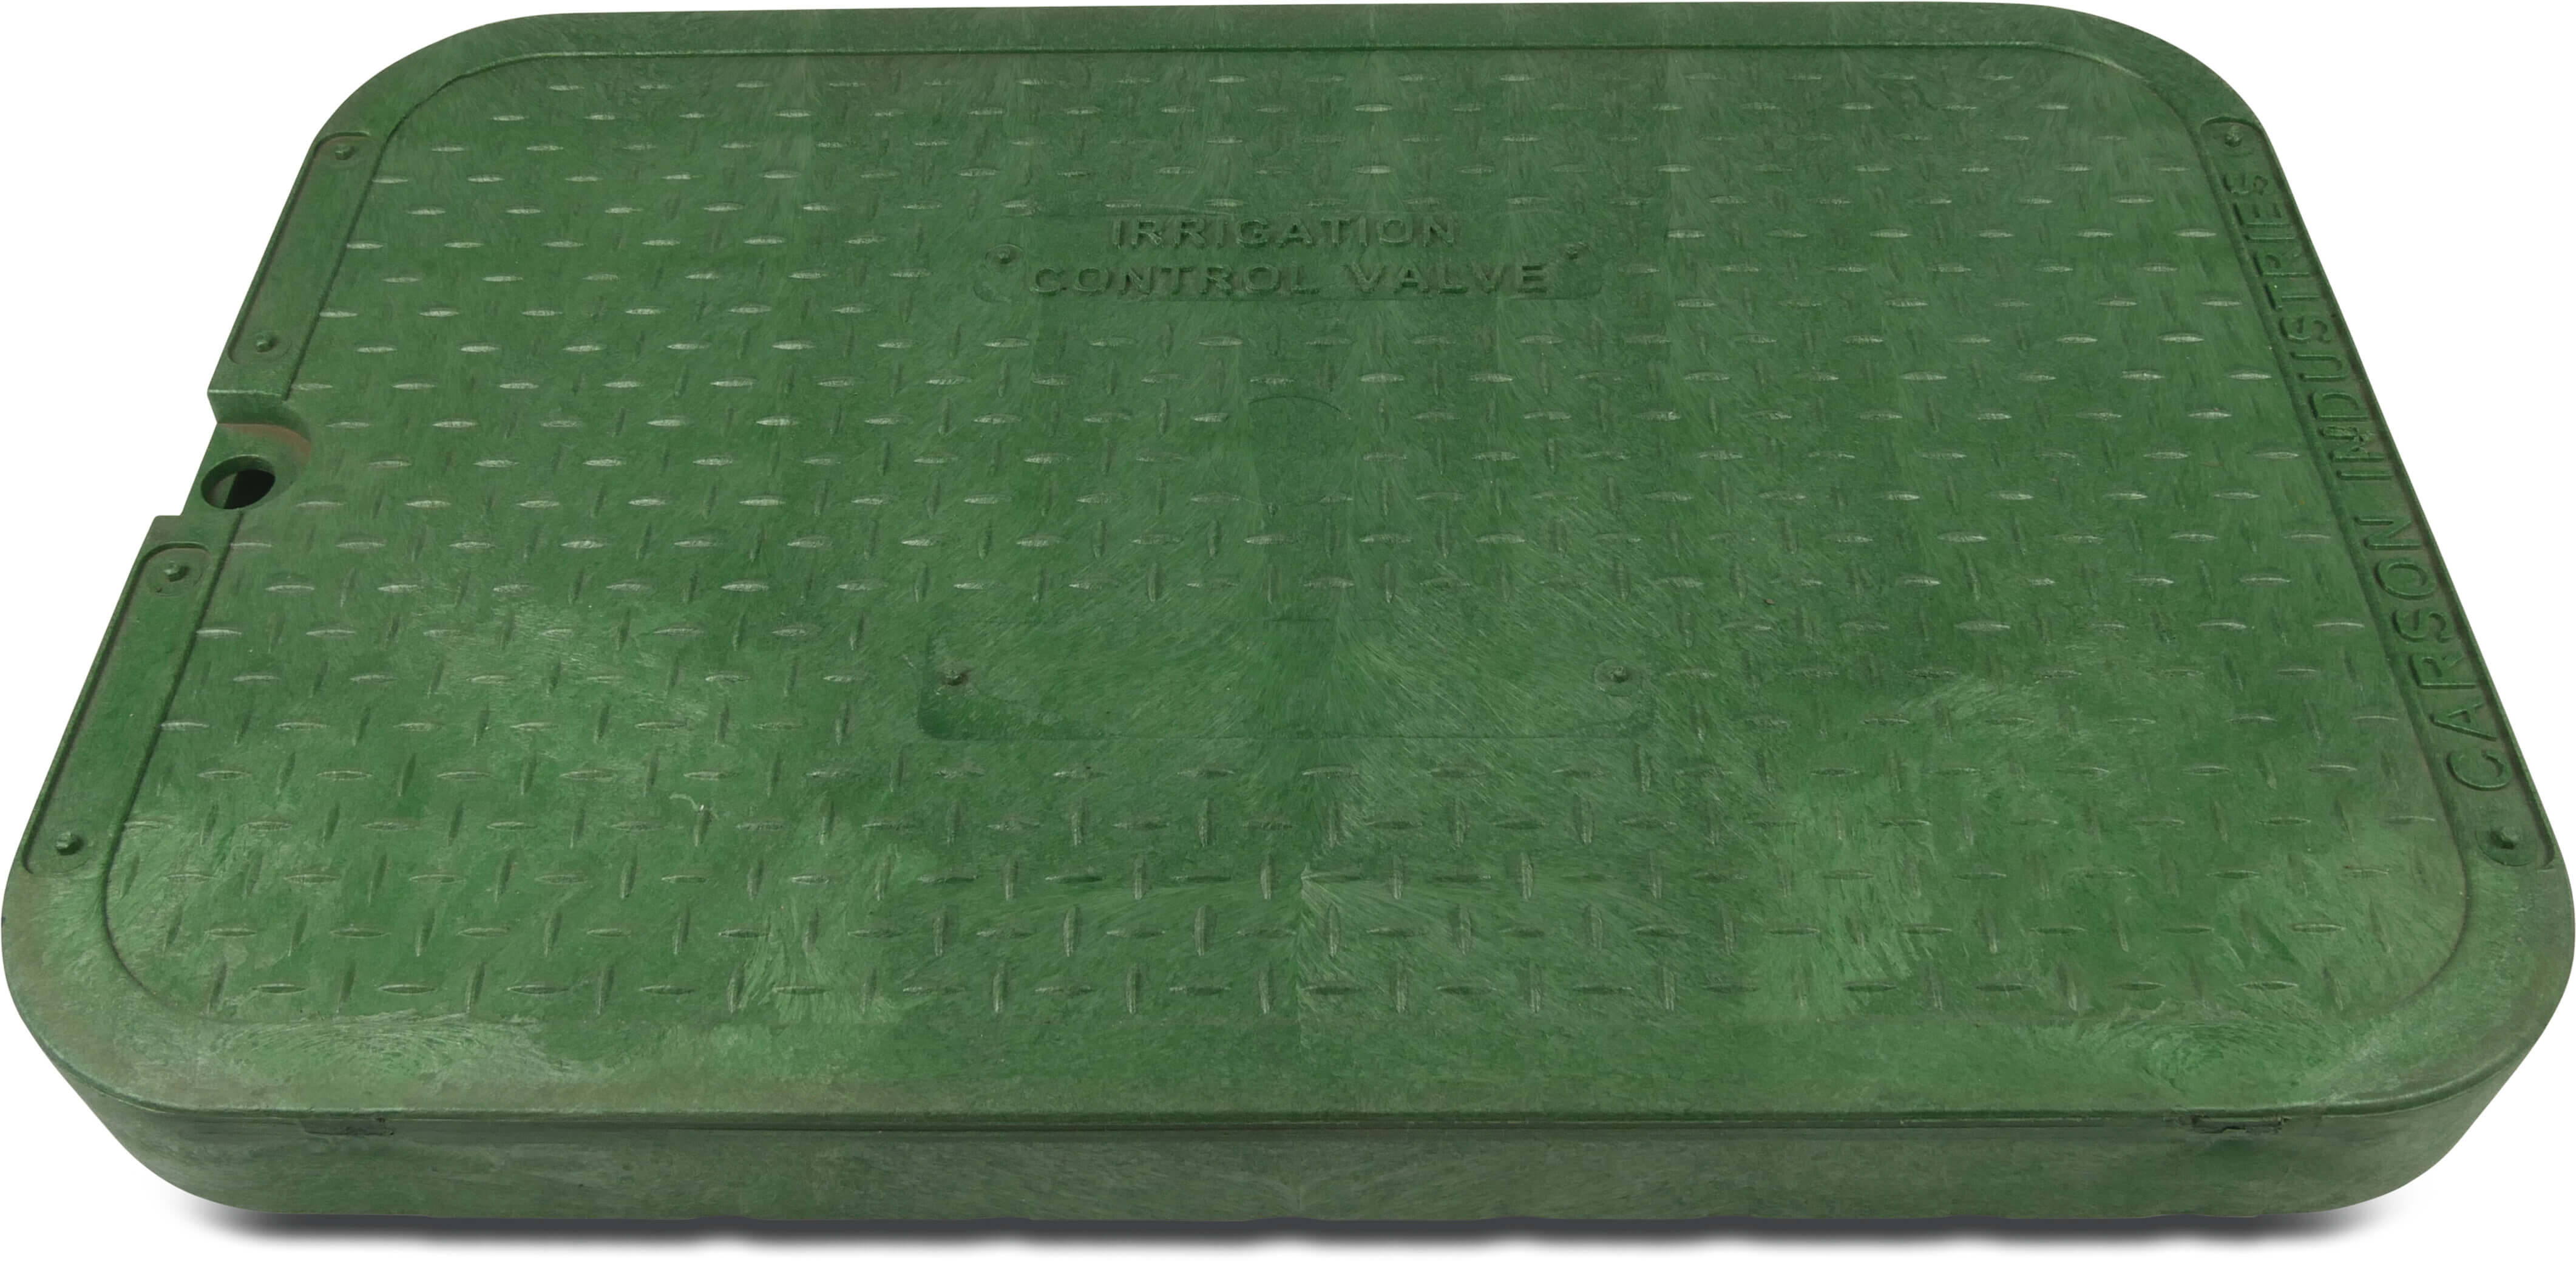 Valve box cover rectangular HDPE green type VB-1324